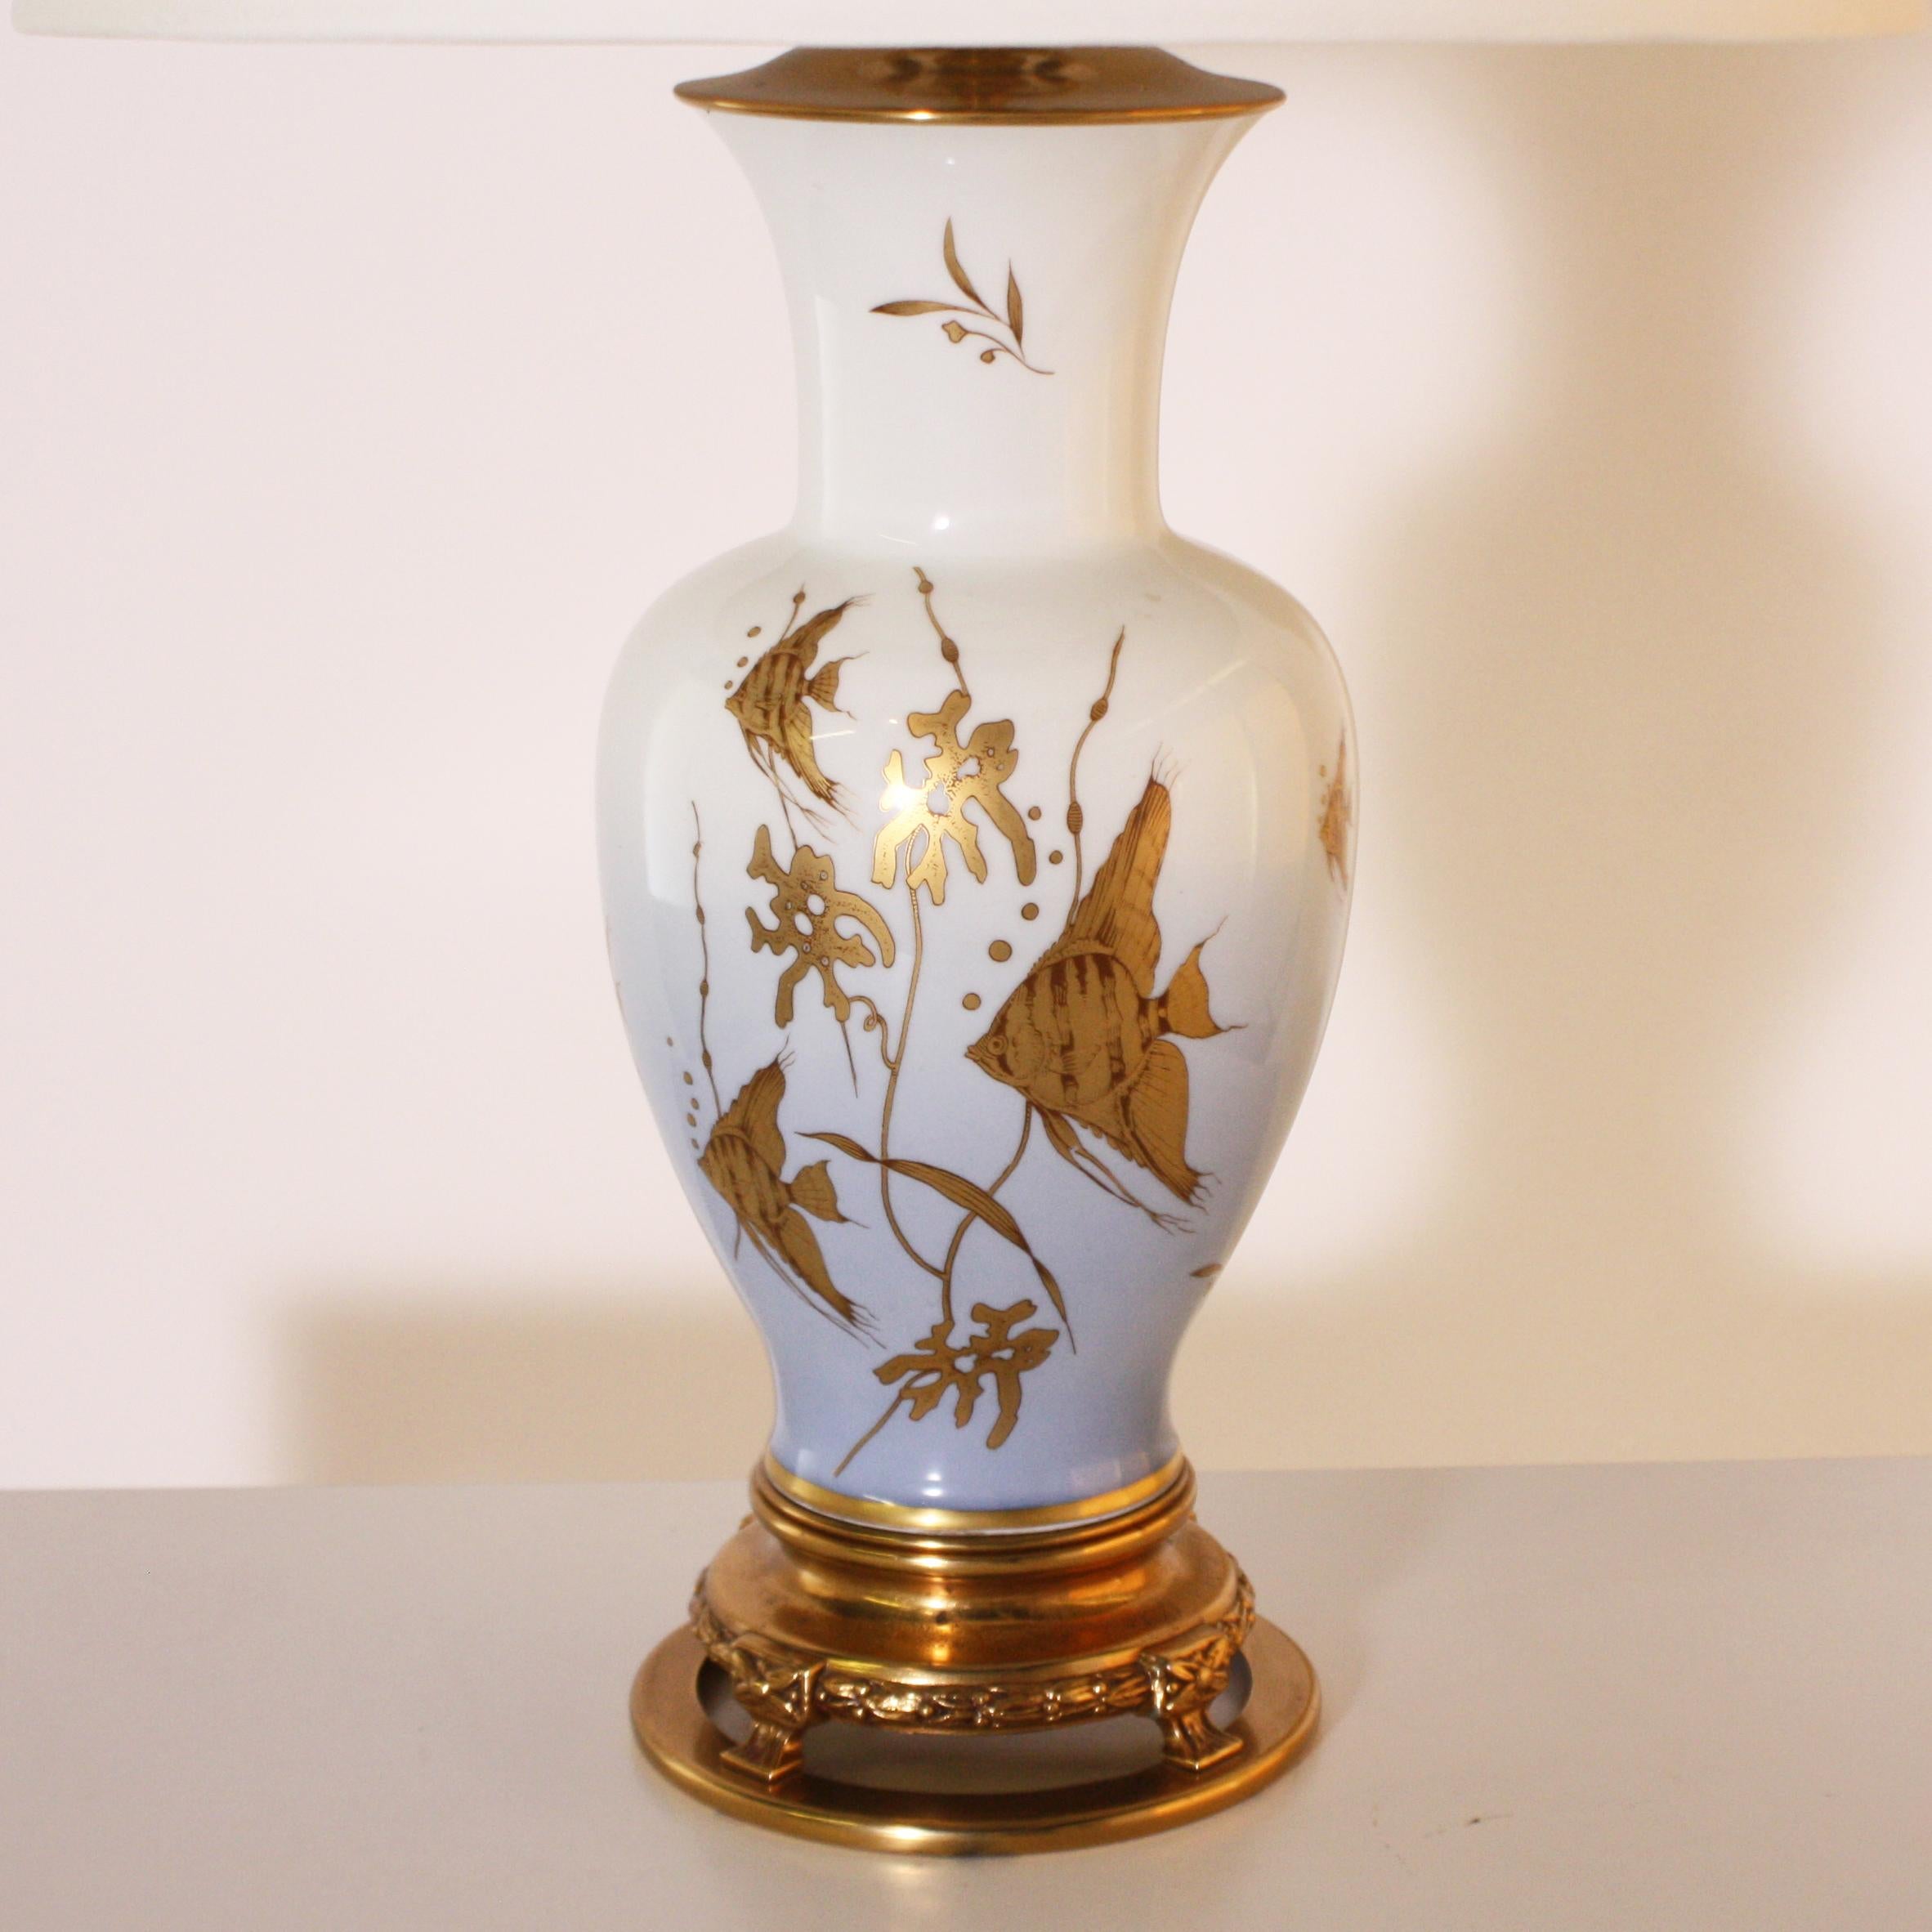 Marbro porcelain Angelfish lamp, circa 1960

Custom linen shade, crystal ball finial, gold twisted cording.